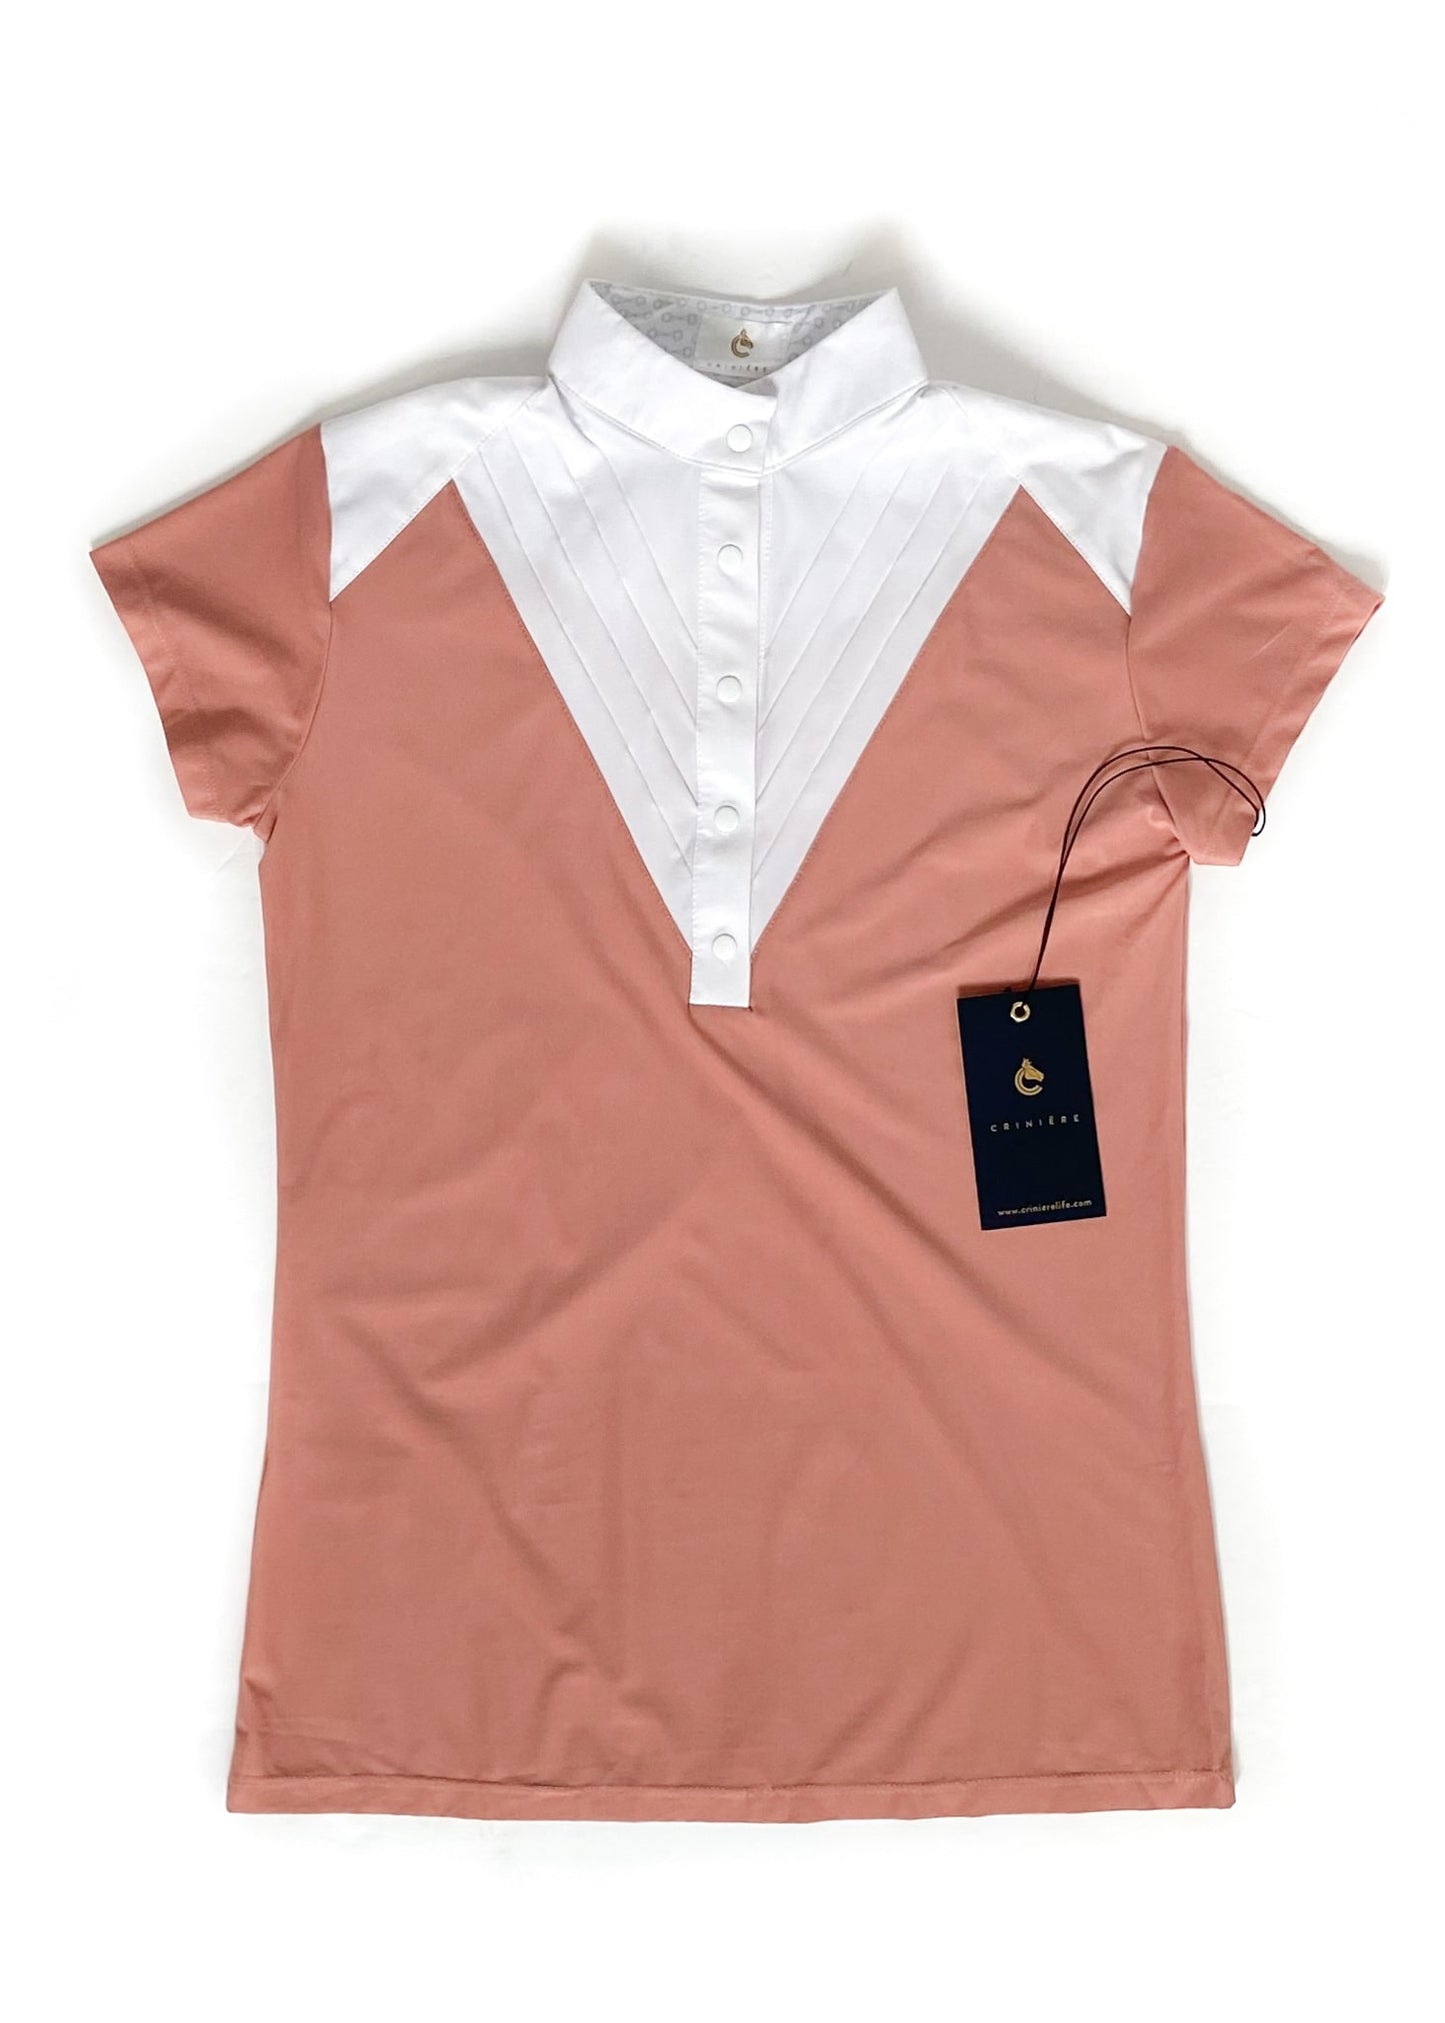 Criniere Margot Show Shirt - Pale Rose - XL